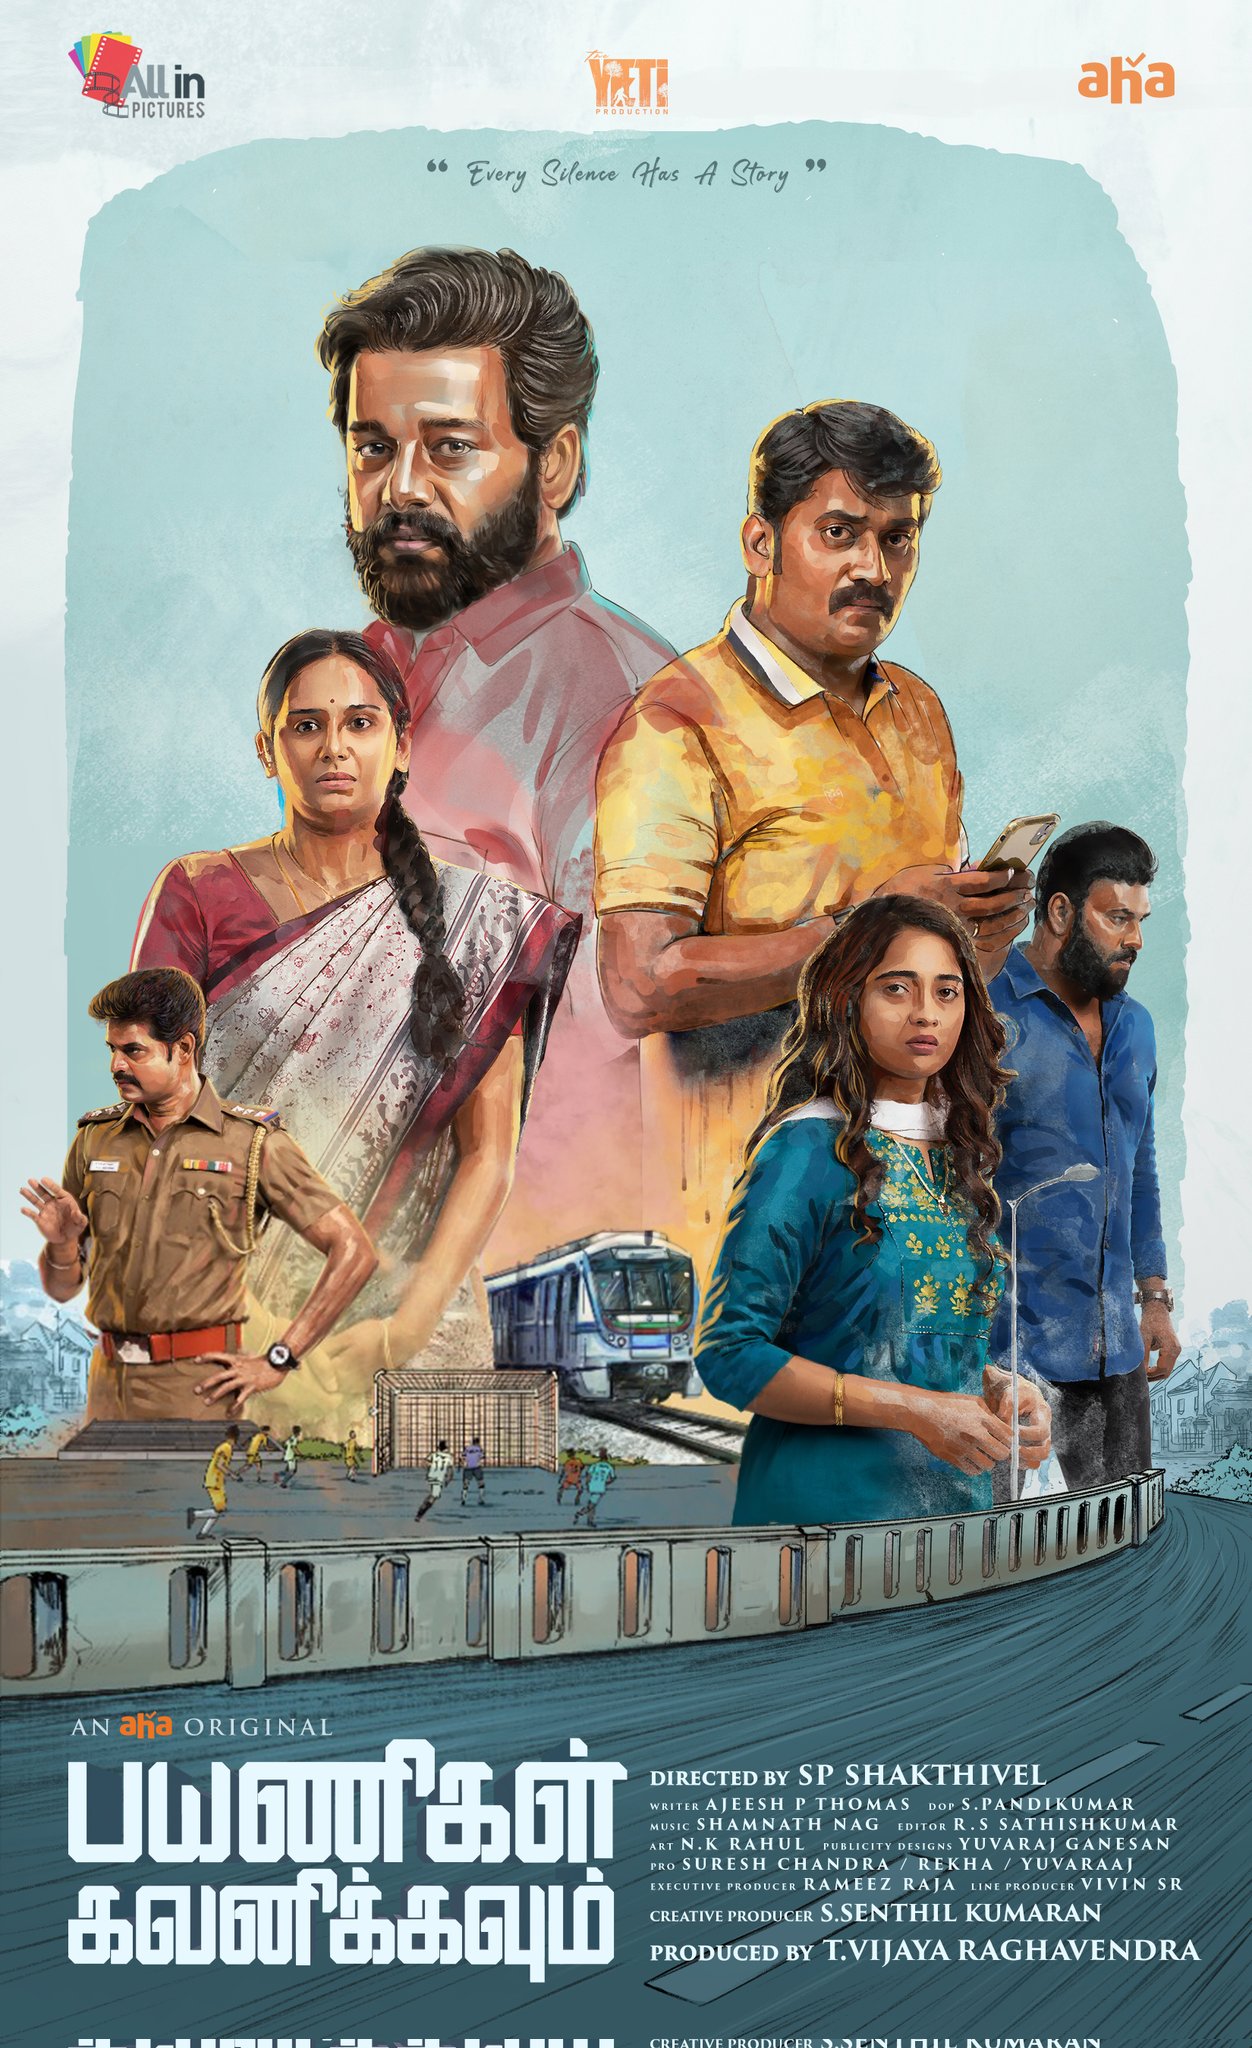 Payanigal Gavanikavum (2022) is tamil drama film directed by S.P. Shakthivel